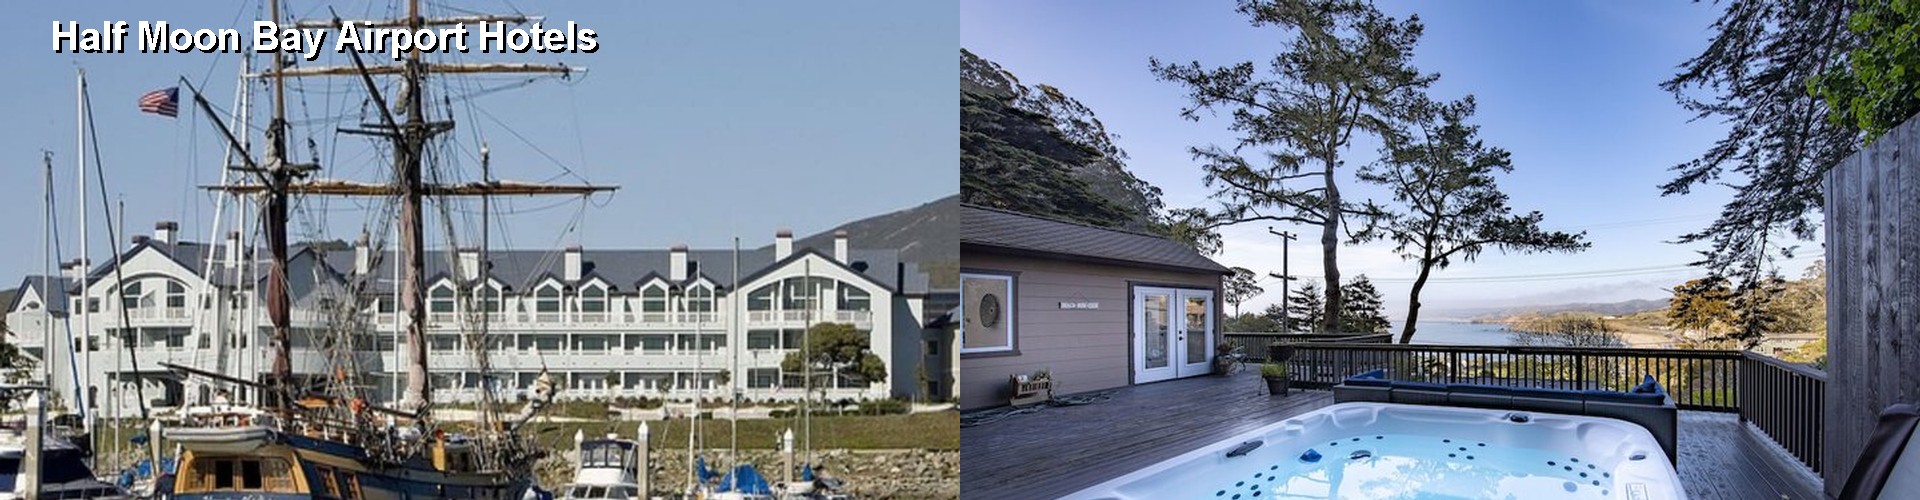 5 Best Hotels near Half Moon Bay Airport